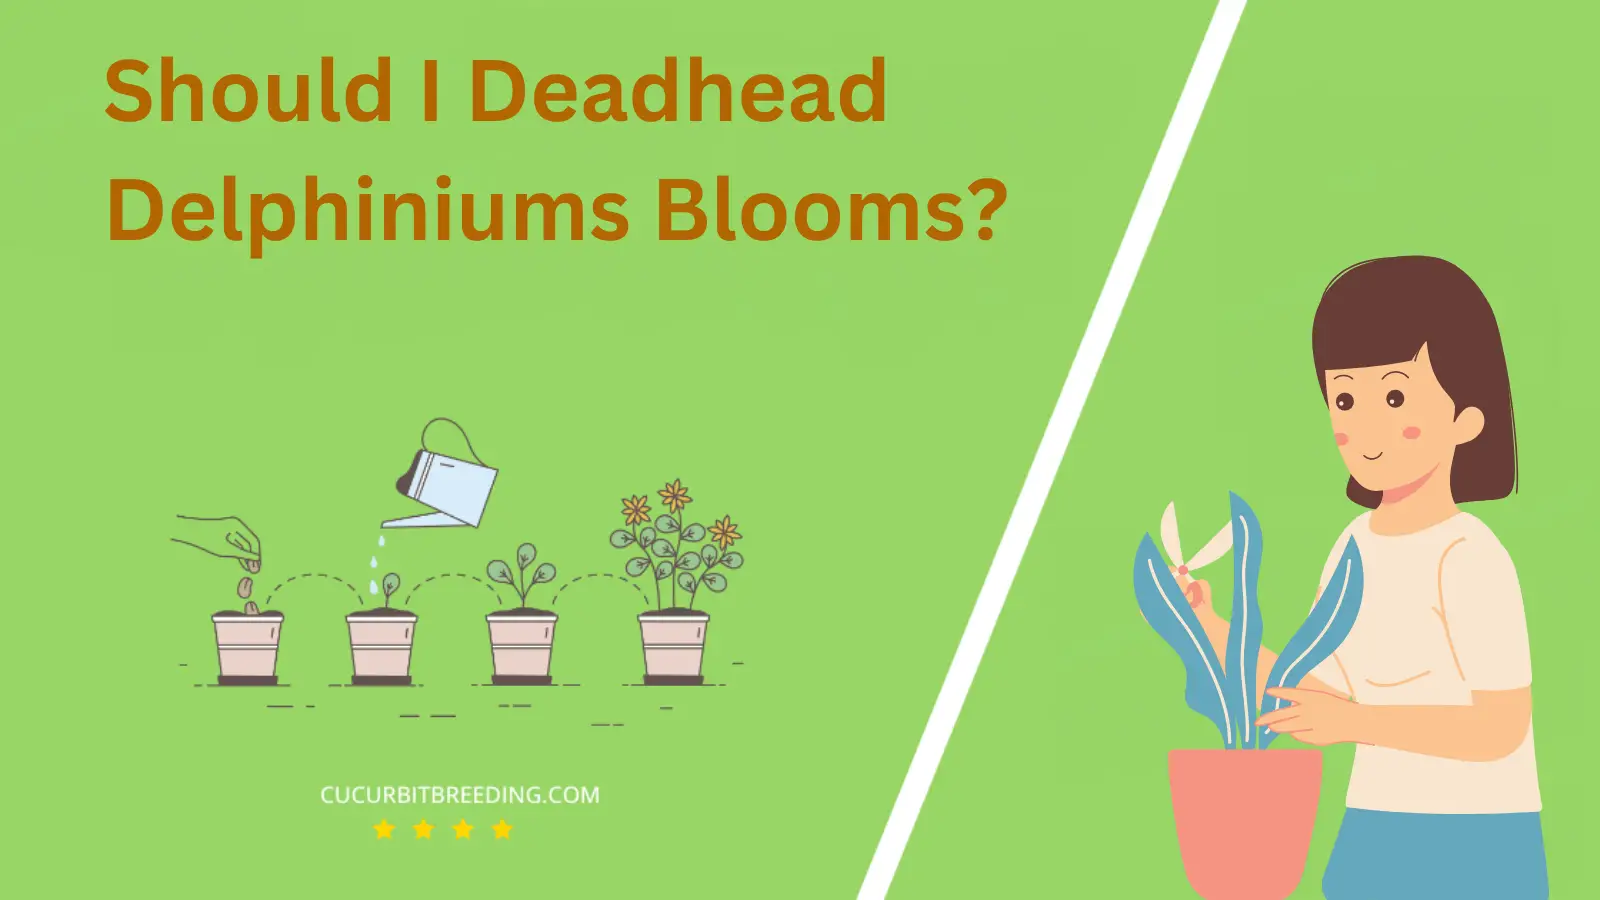 Should I Deadhead Delphiniums Blooms?